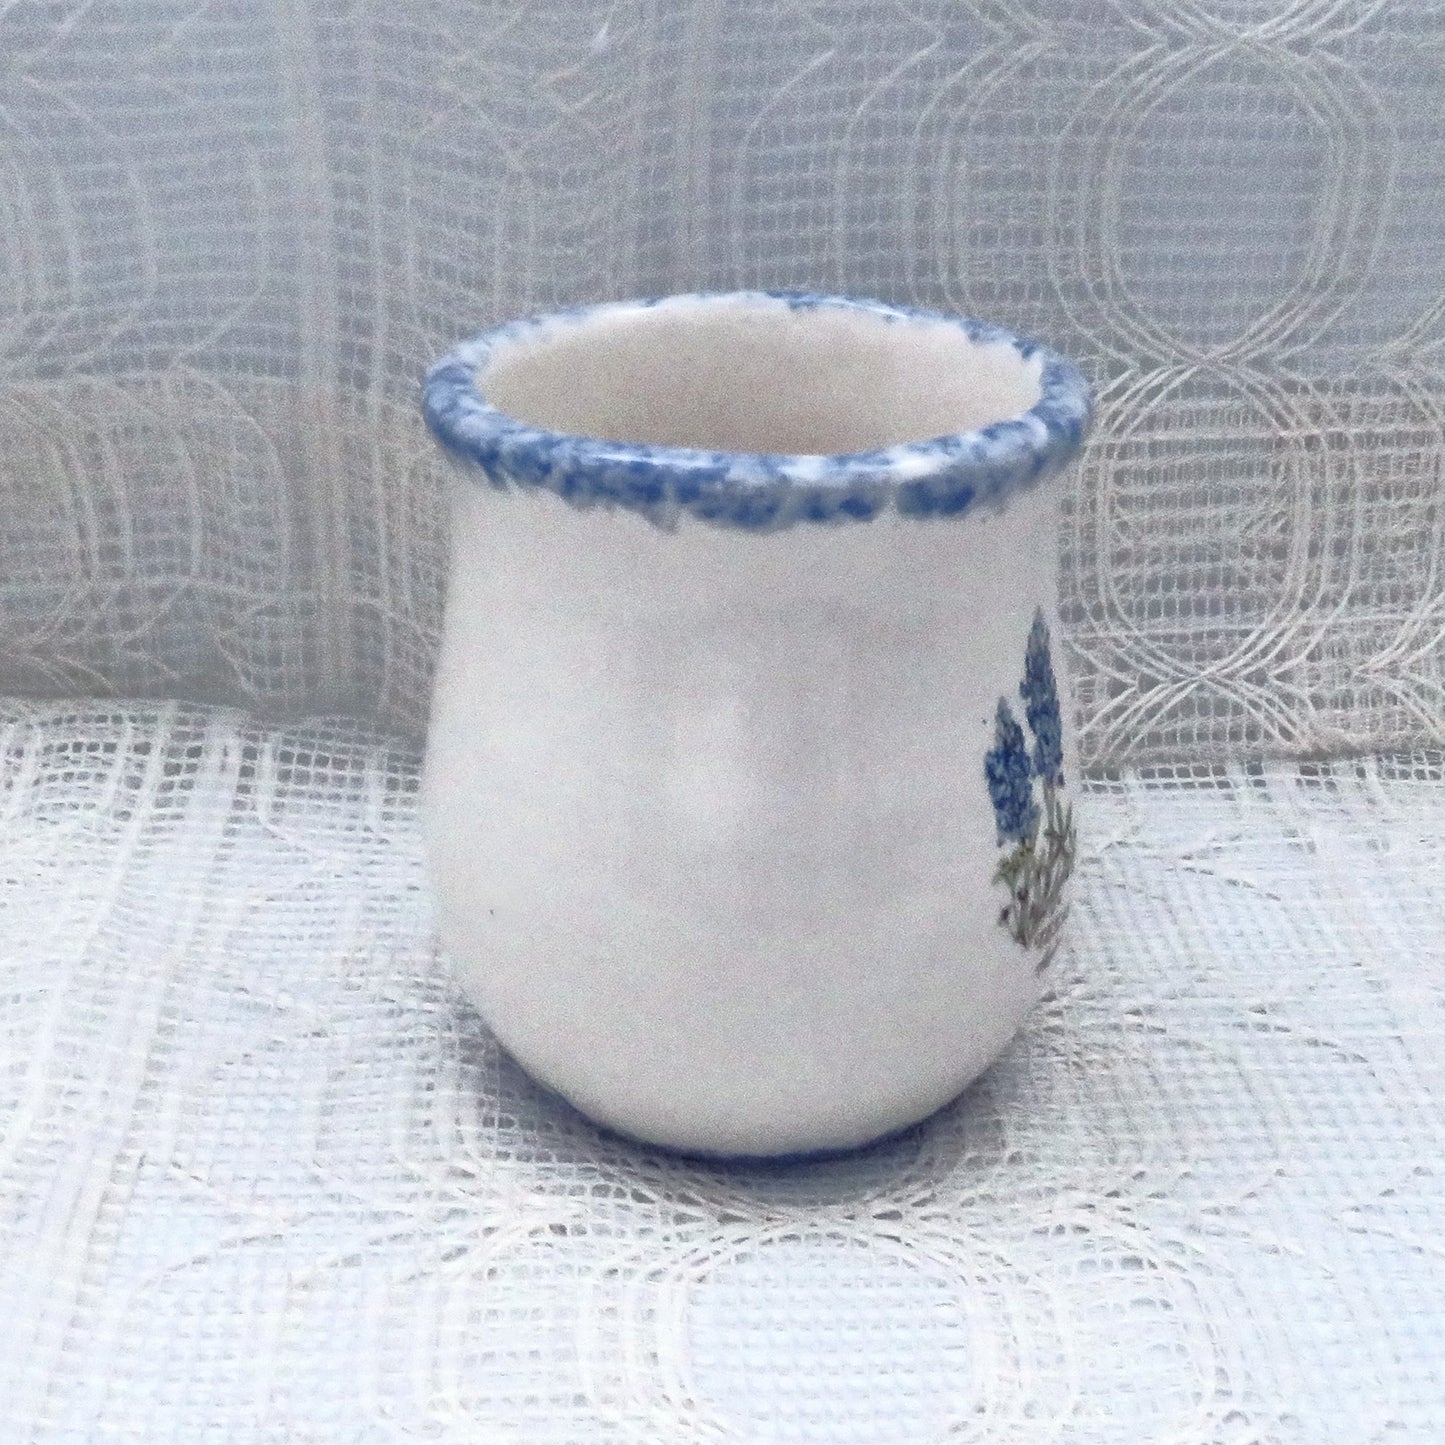 Handmade Ceramic Coffee Mug, Coffee Cup, Tea Cup, Bluebonnet Mug,  Floral Cup, Texas Decor, Made in Texas, Texas Gift, White and Blue Cup